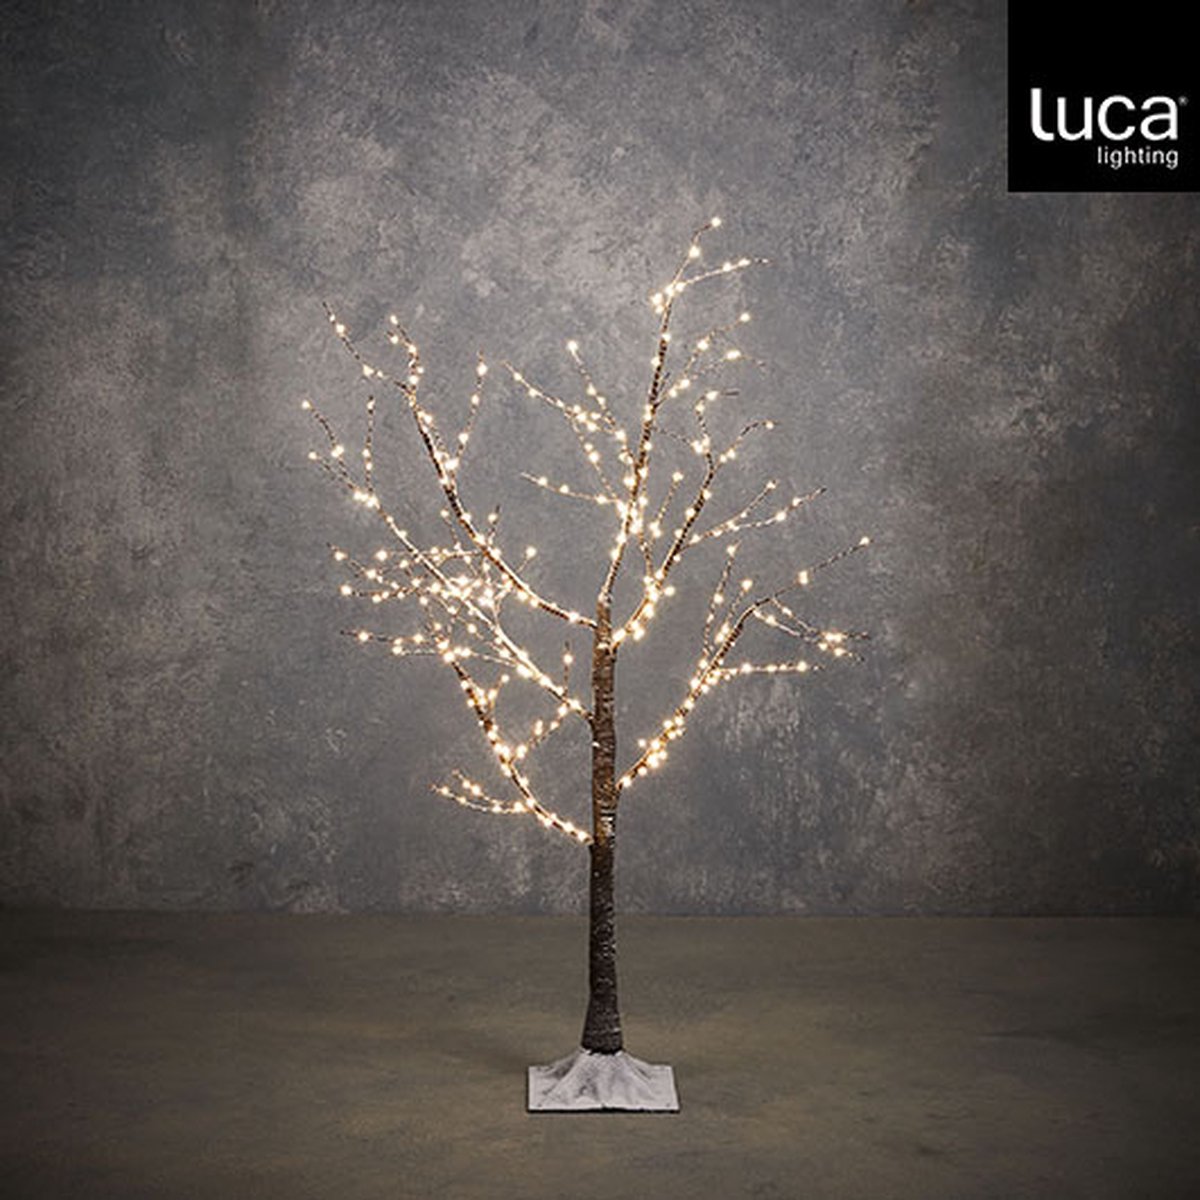 Luca Lighting Boom met Klassiek Witte LED Verlichting - H120 x Ø80 cm - Bruin